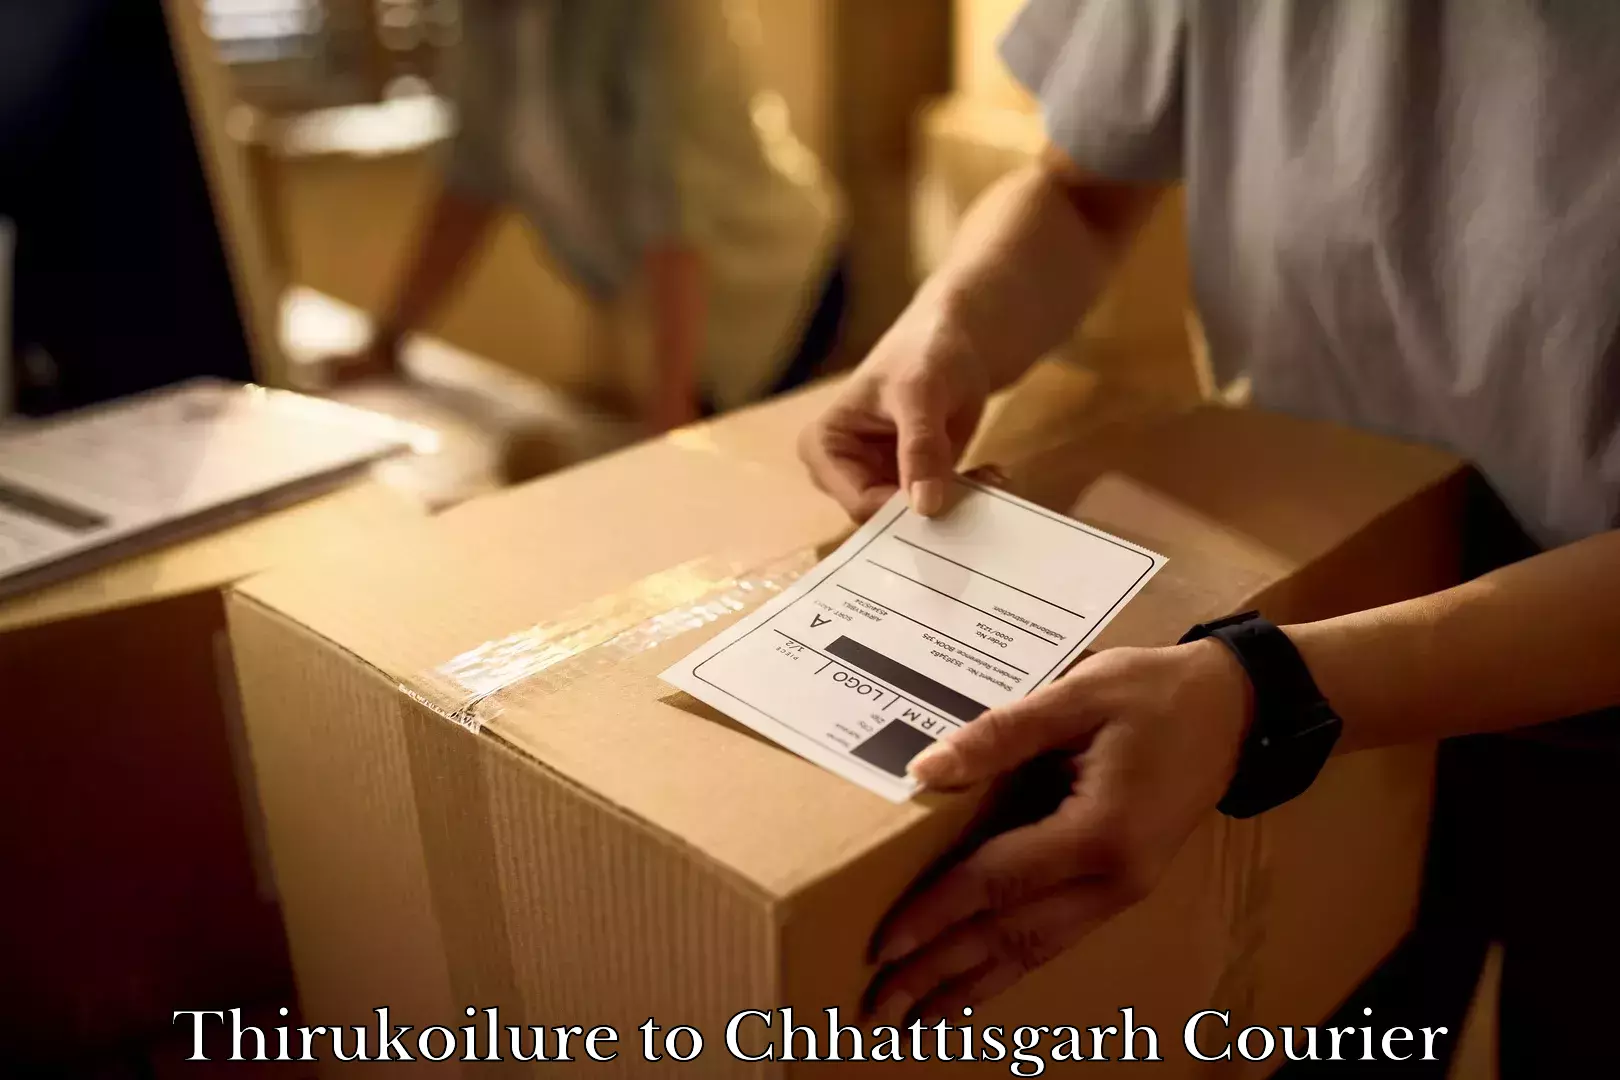 Moving and handling services Thirukoilure to Chhattisgarh